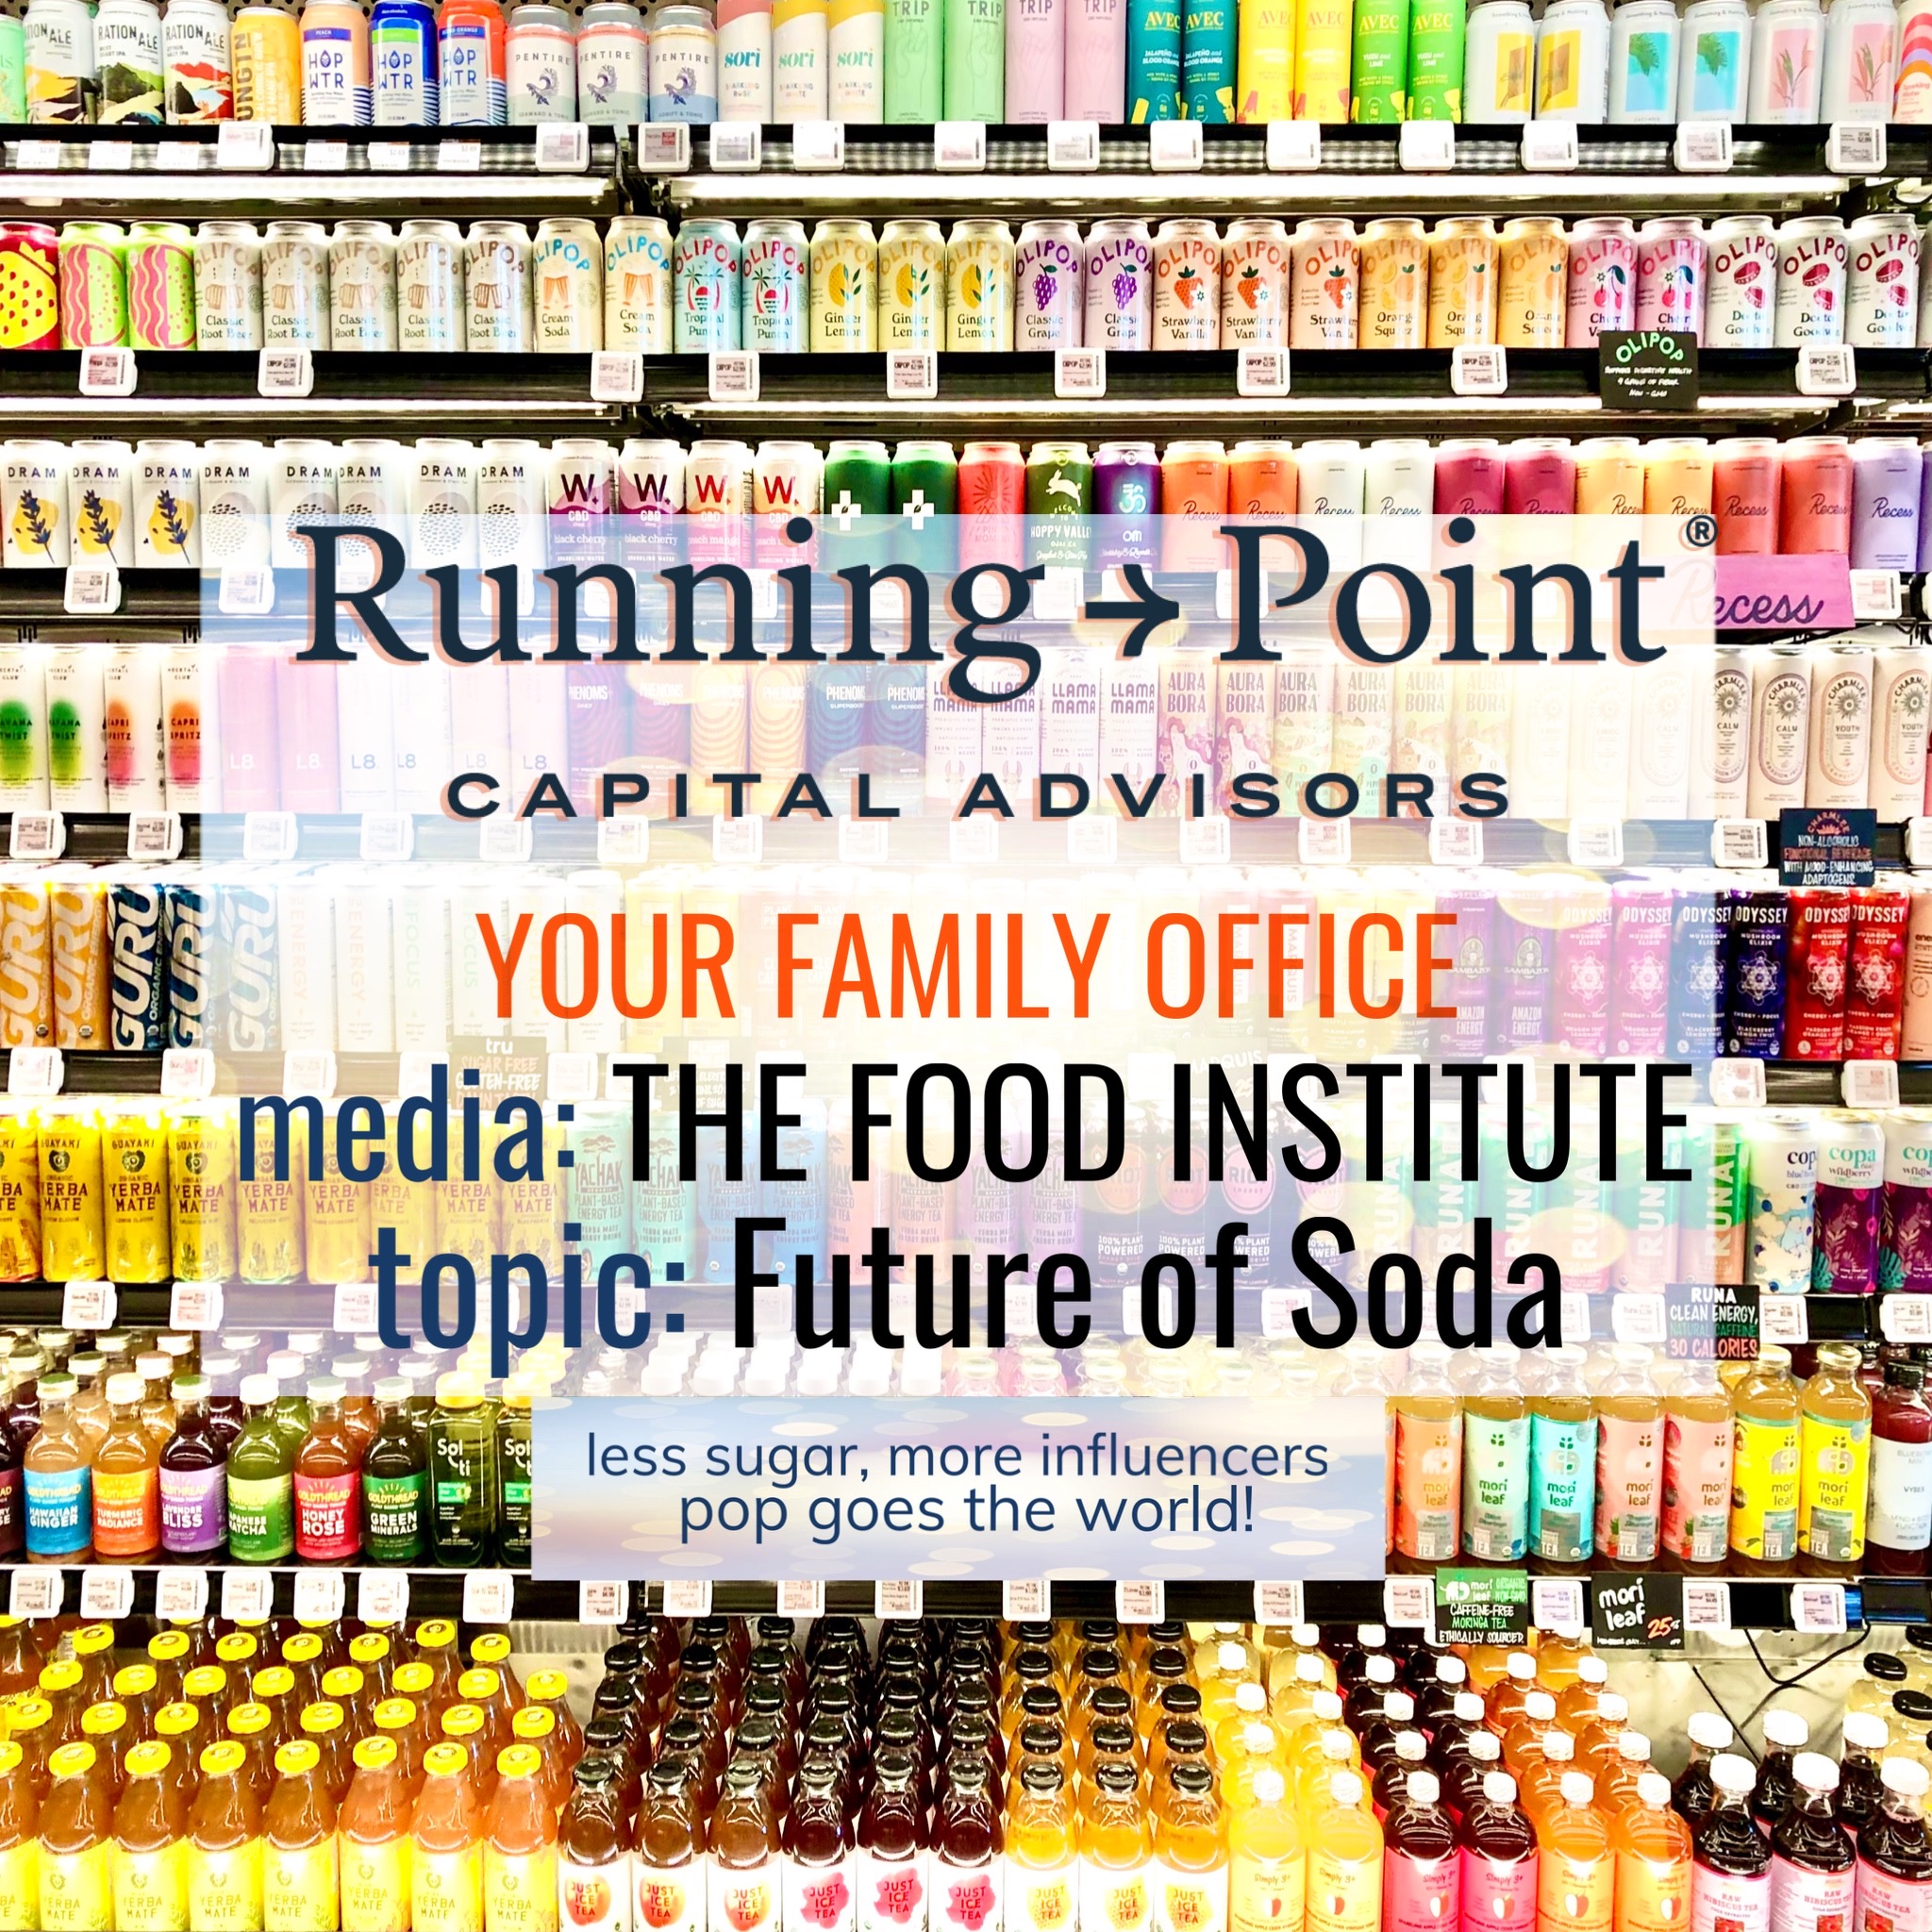 The Food Institute: The Future of Soda